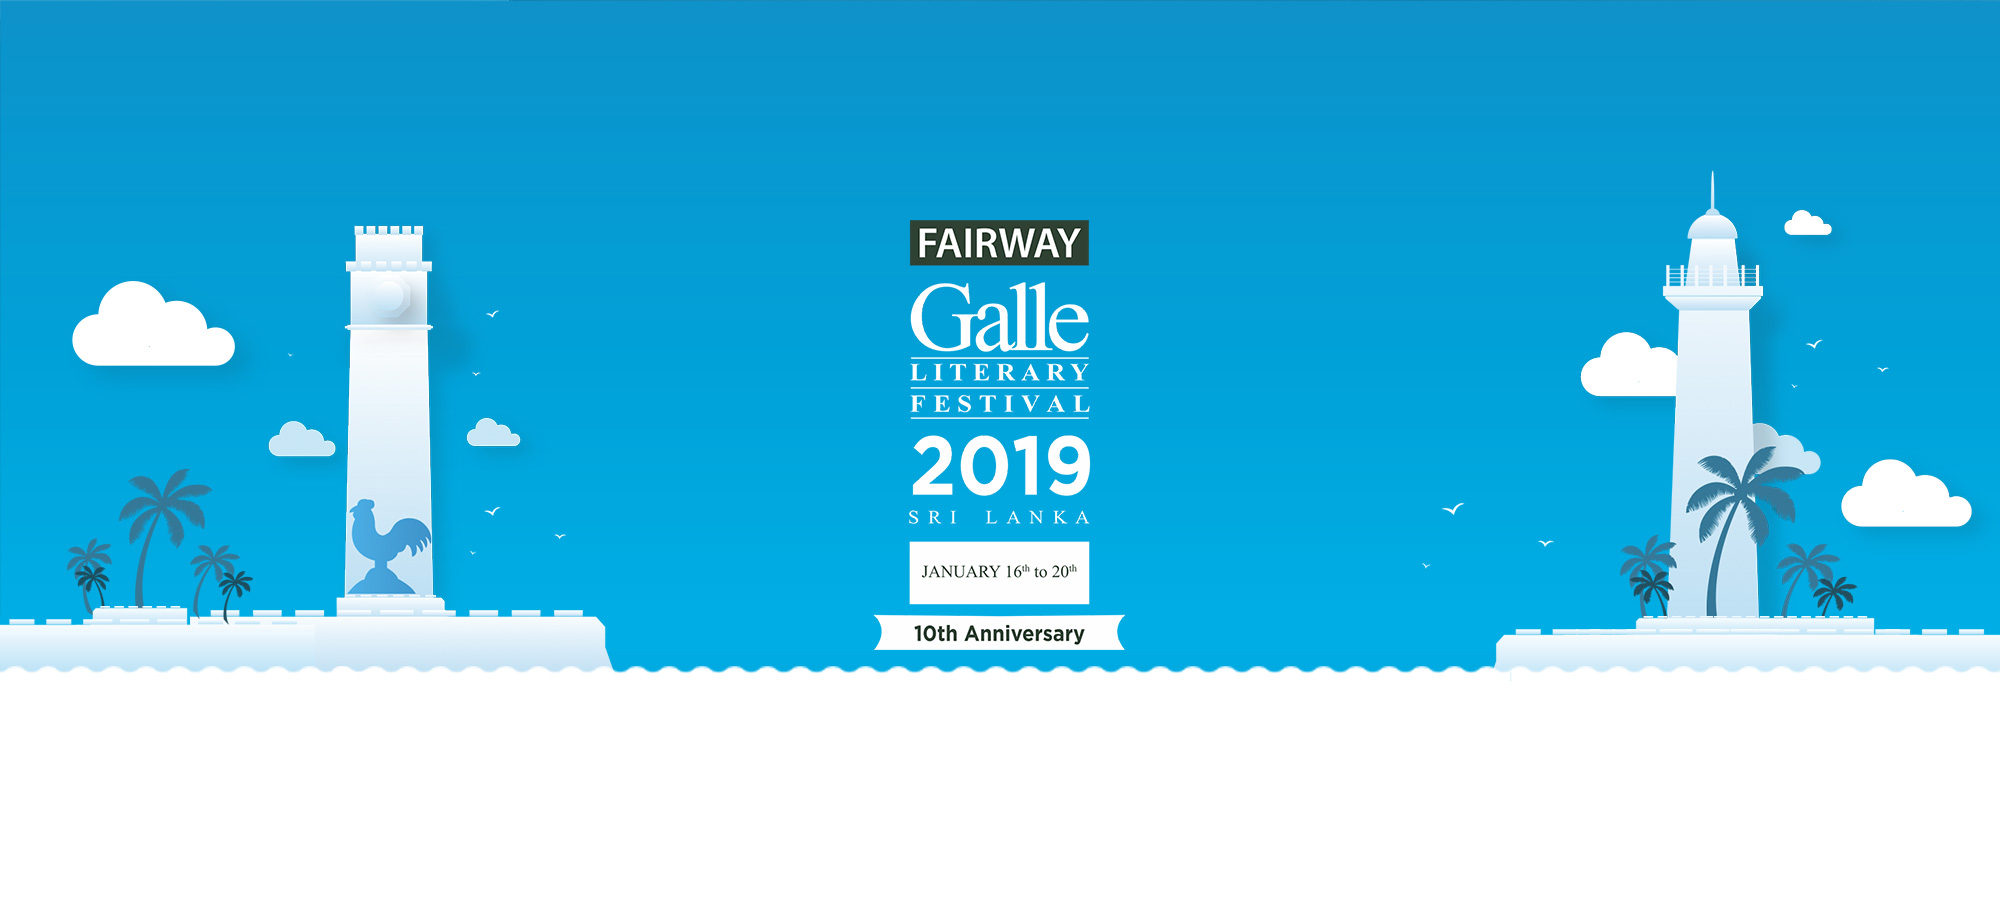 blog-sri-lanka_fairway galle literary festival 2019_1